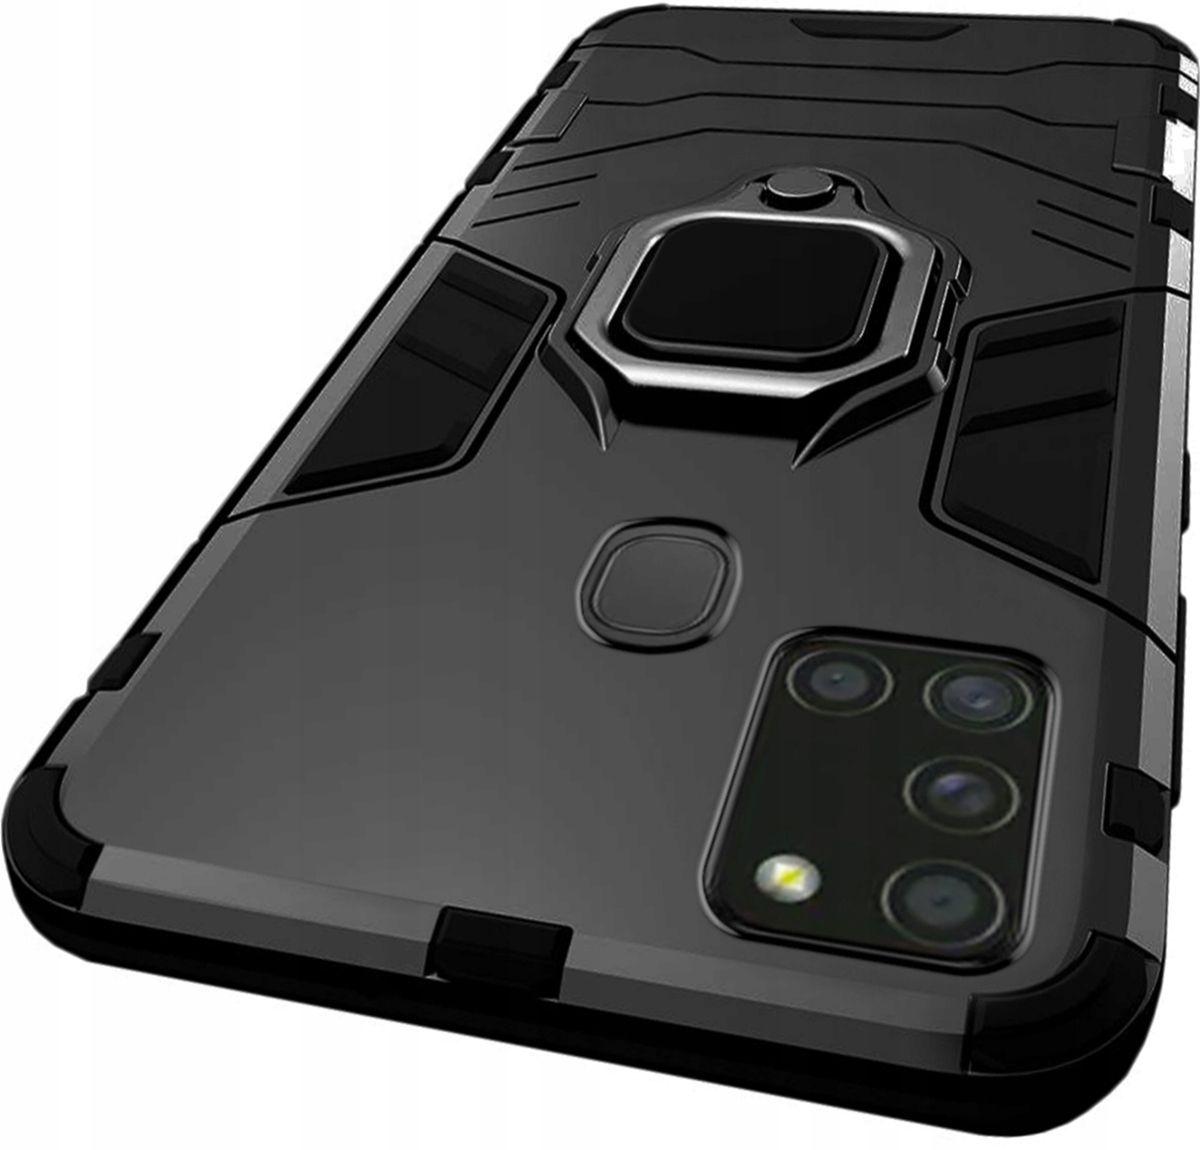 Armored case holder ring Samsung A71 (SM-A715) black